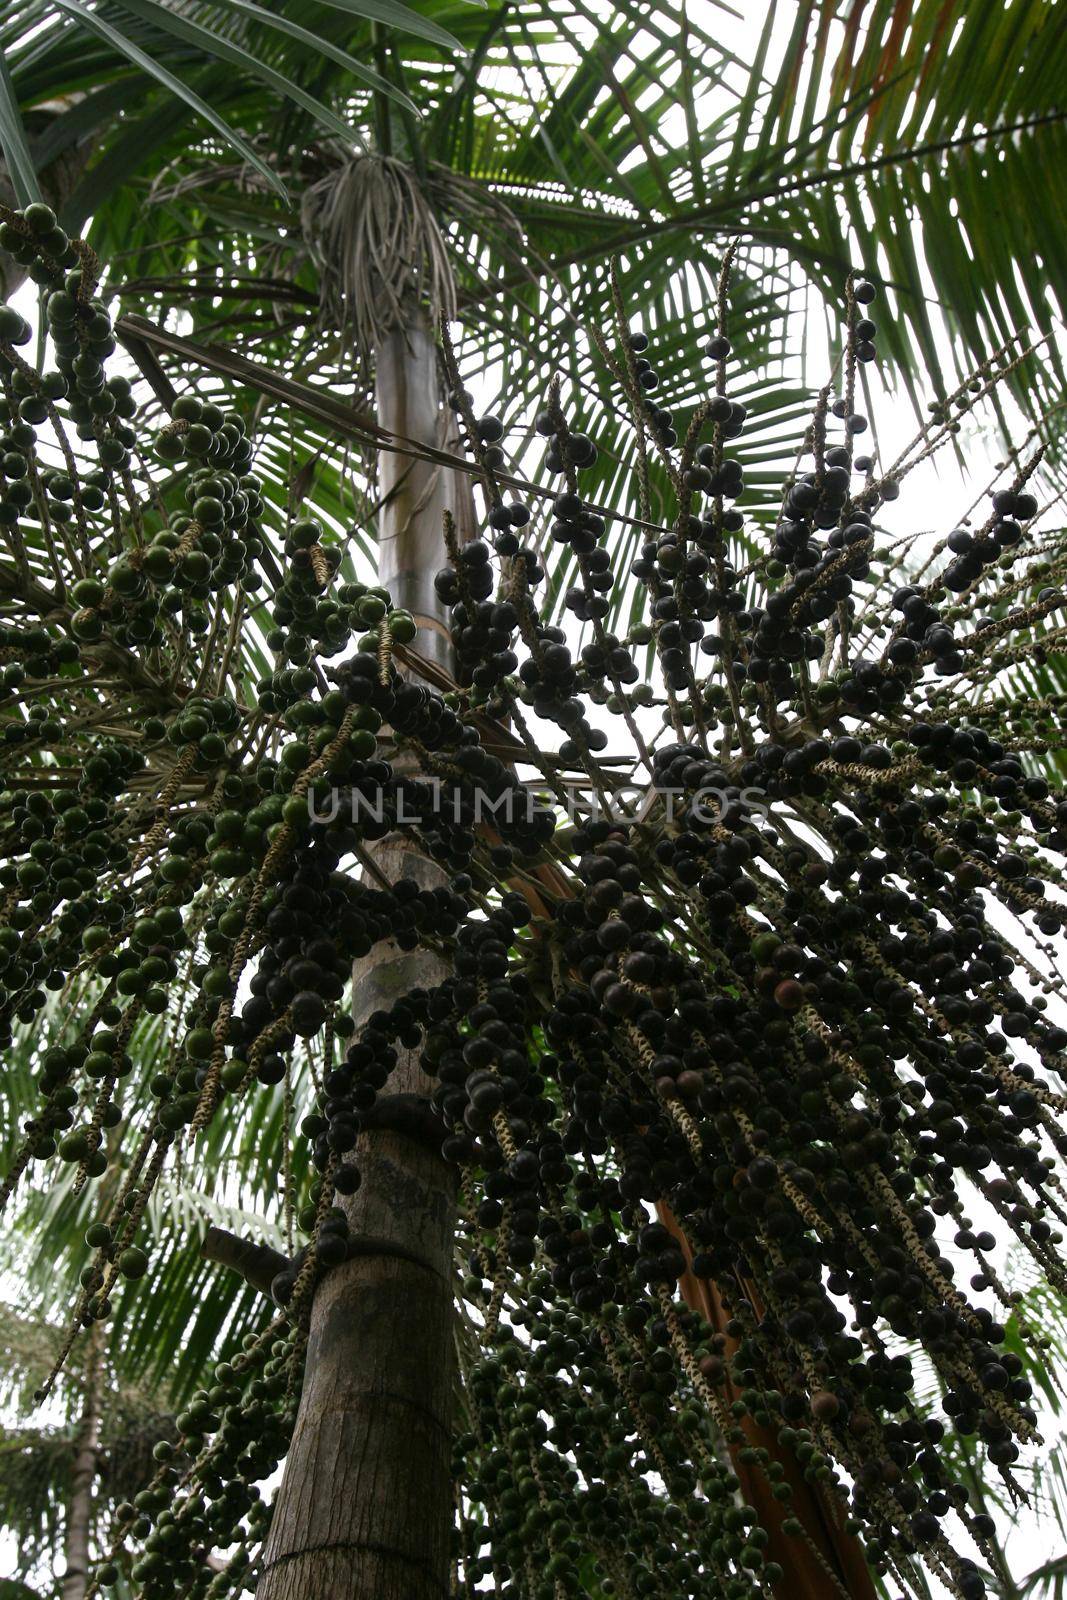 arataca, bahia / brazil - february 2, 2012: Acai palm plantation in the municipality of Arataca.